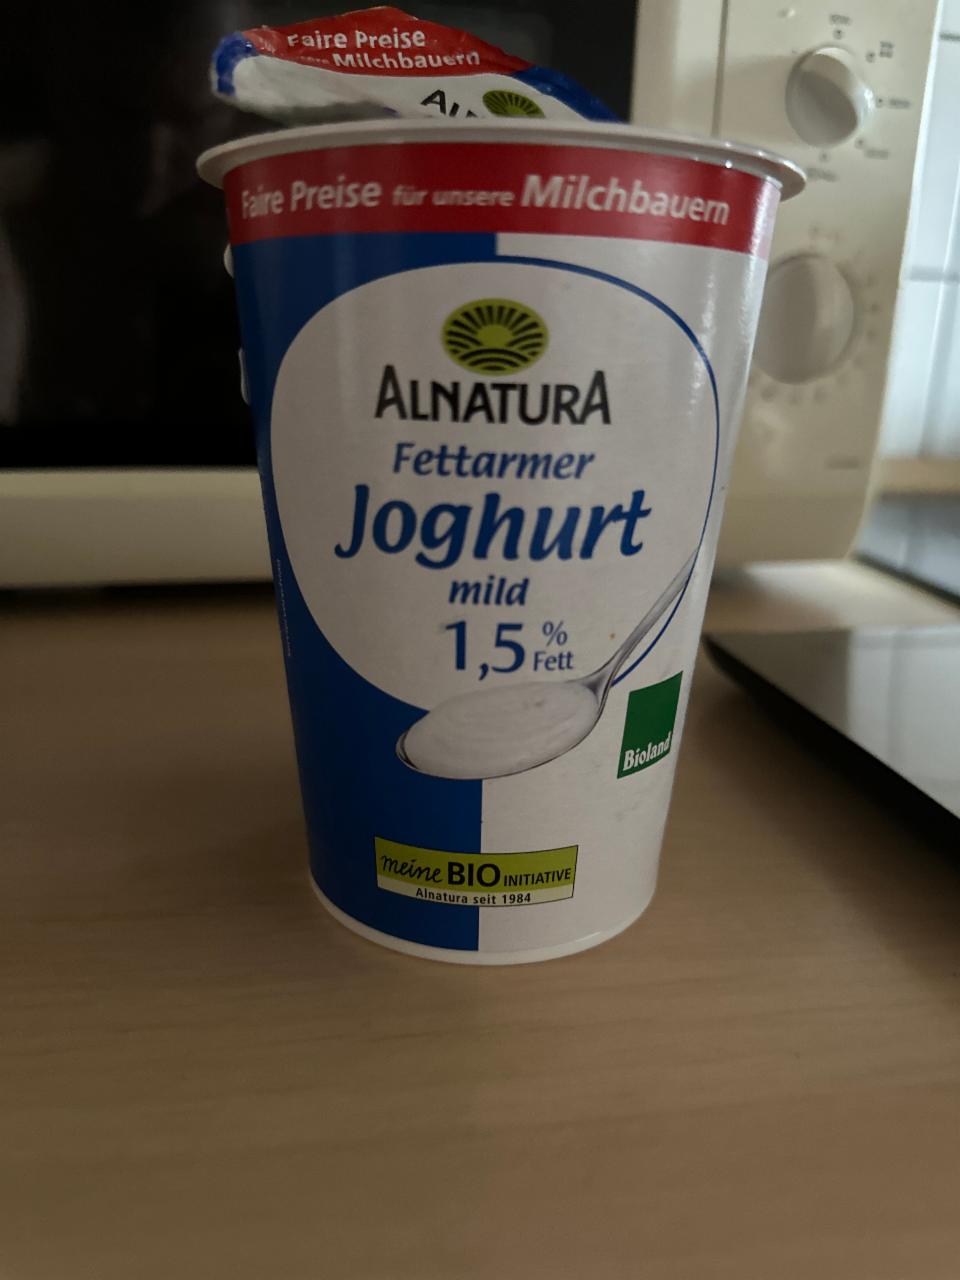 Фото - Fettarmer Joghurt mild 1.5% Alnatura